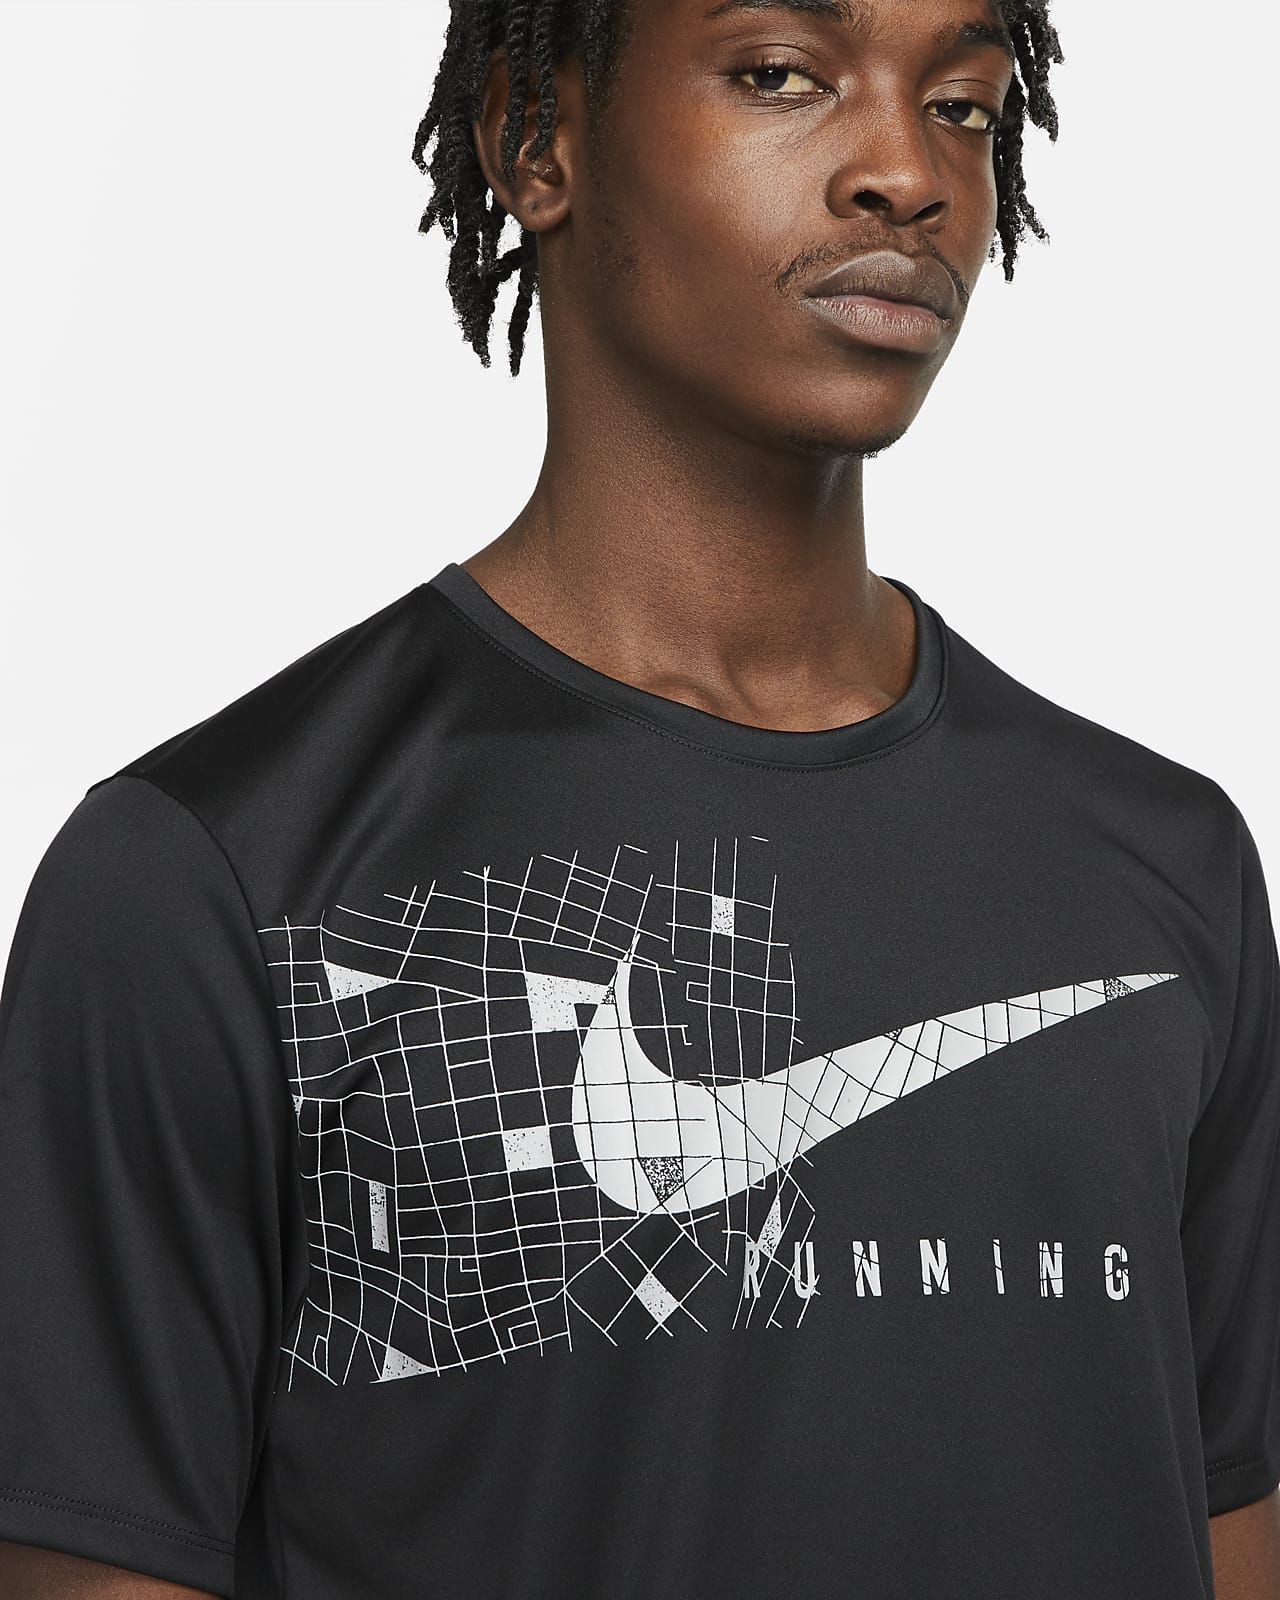 Nike Dri-FIT UV Run Division Miler Men's Short-Sleeve Graphic Running Top